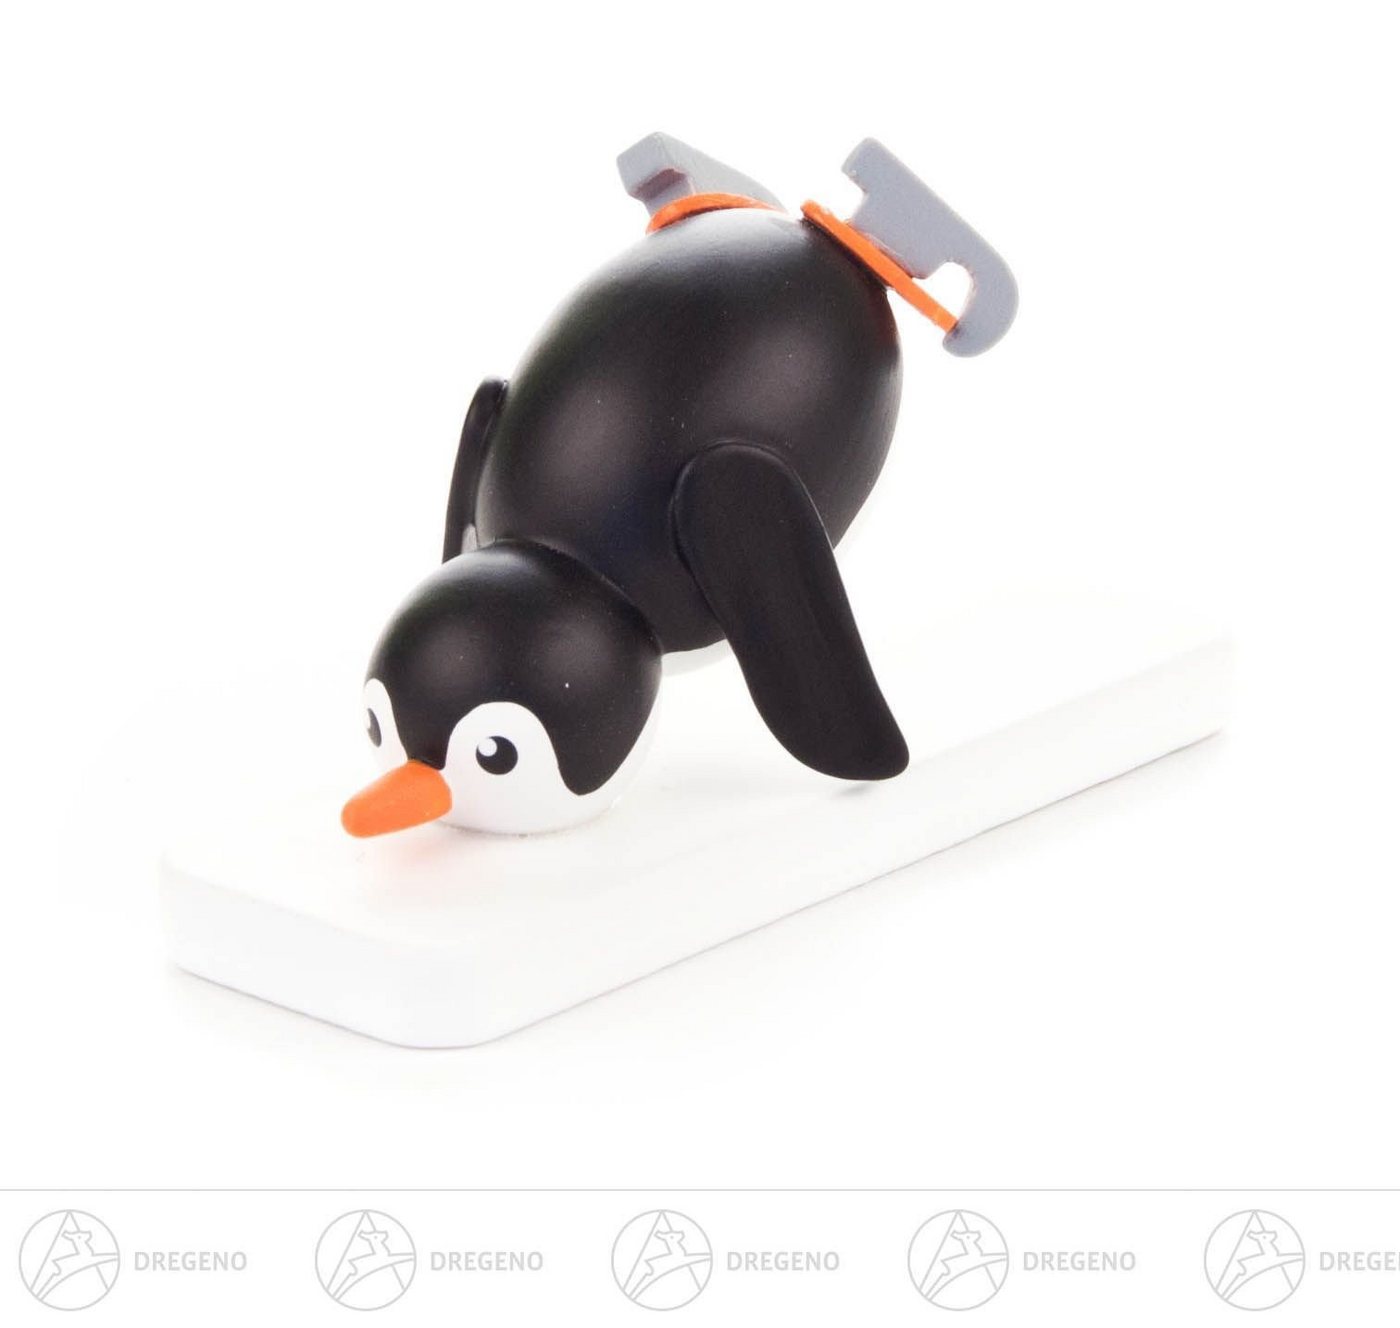 Dregeno Erzgebirge Sammelfigur Miniatur Pinguin Eiskunstläufer Höhe ca 3,5 cm NEU, Miniaturfigur Pinguin mit Schlittschuhen von Dregeno Erzgebirge